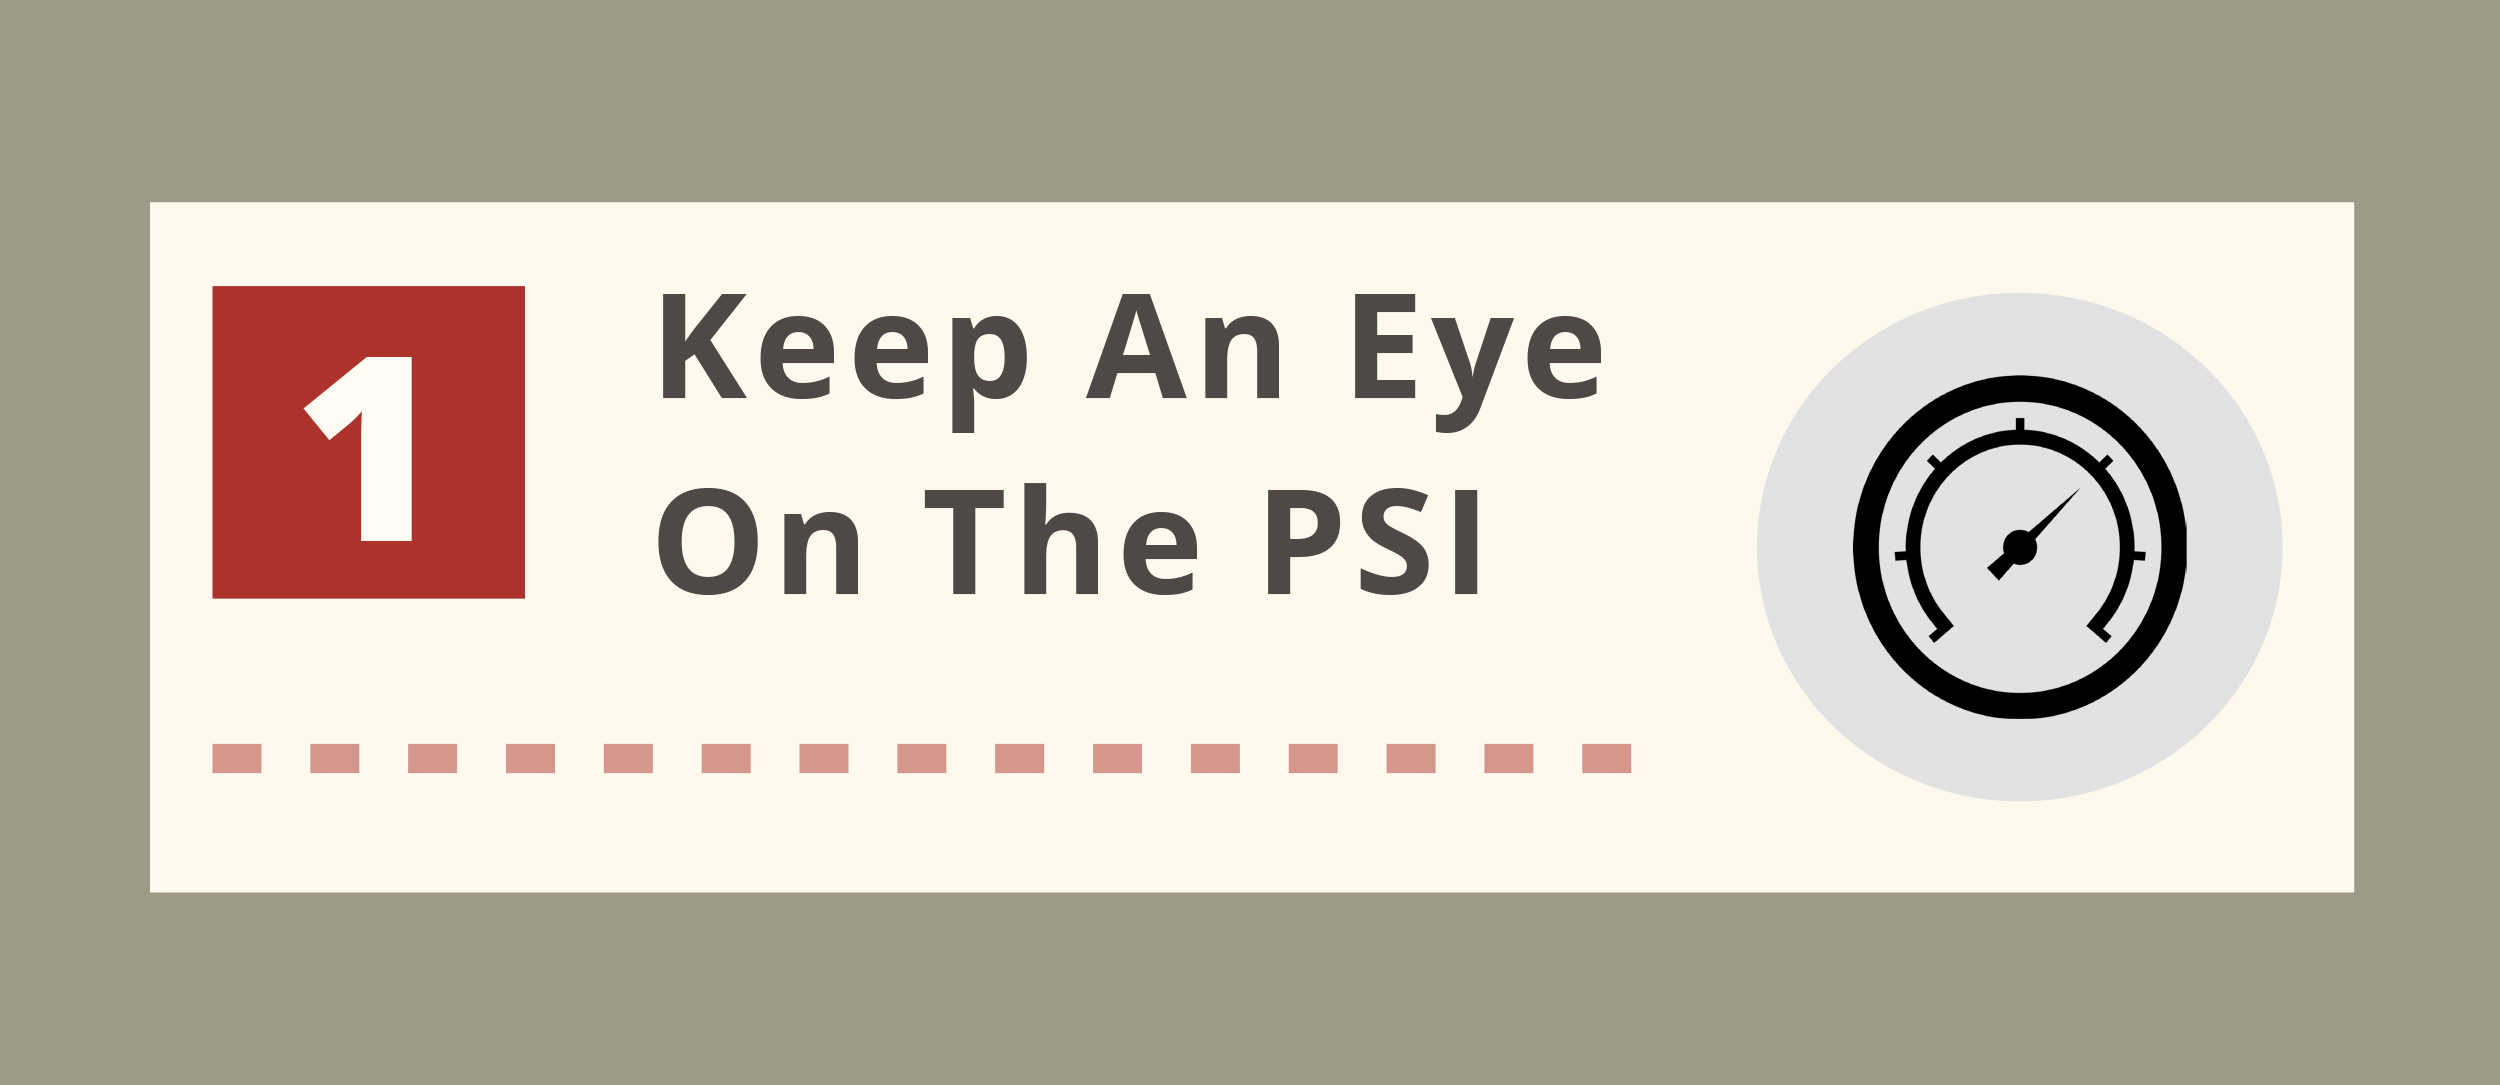 Key an Eye on the PSI